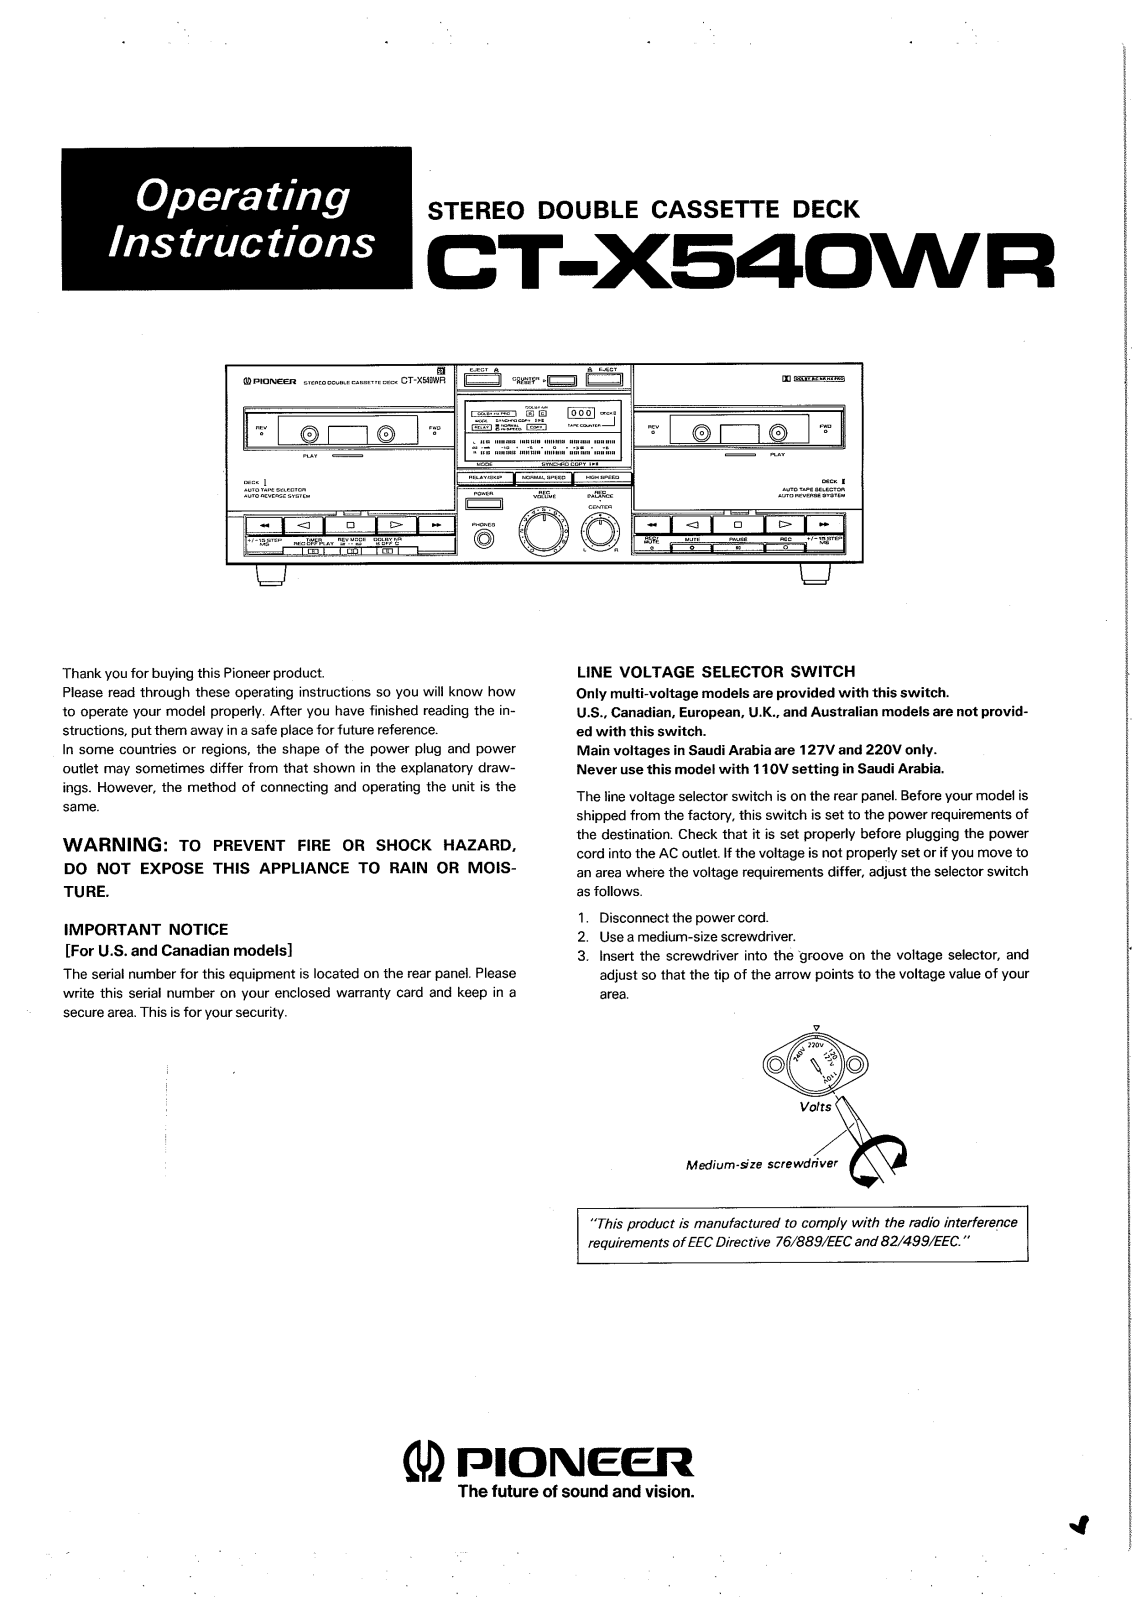 Pioneer CT-X540WR Manual